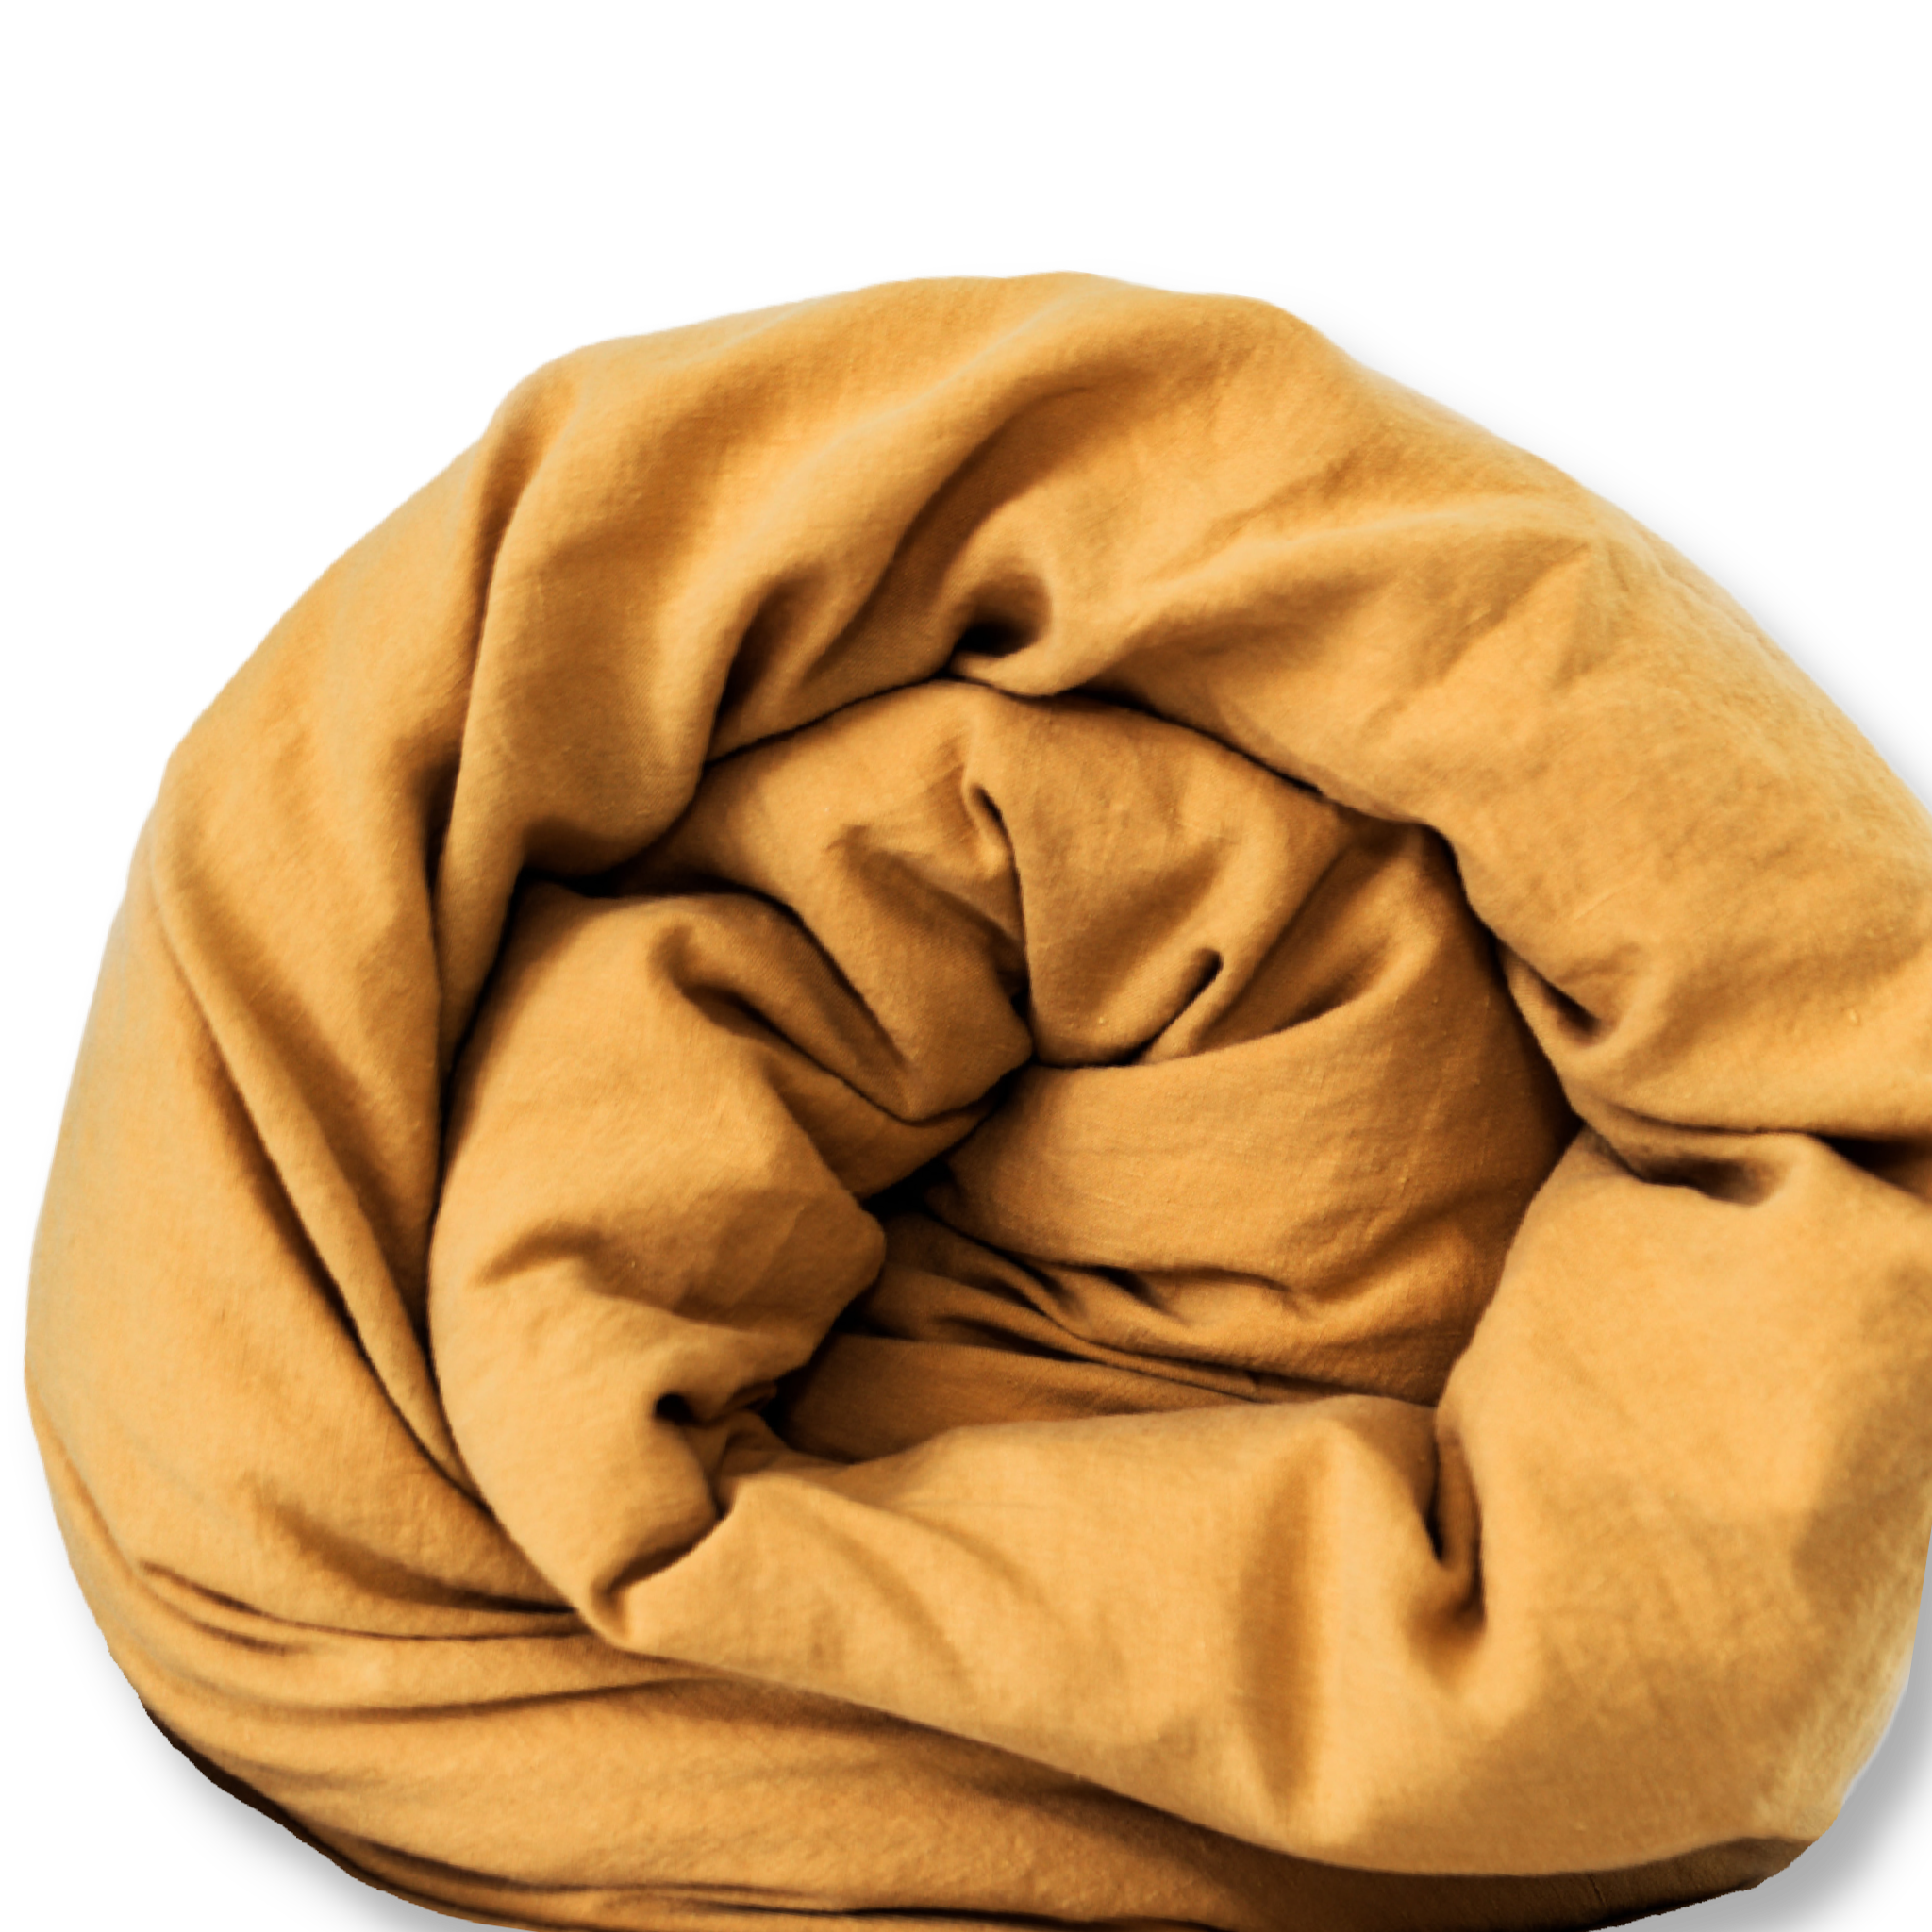 Duvet Cover by Beflax Linen